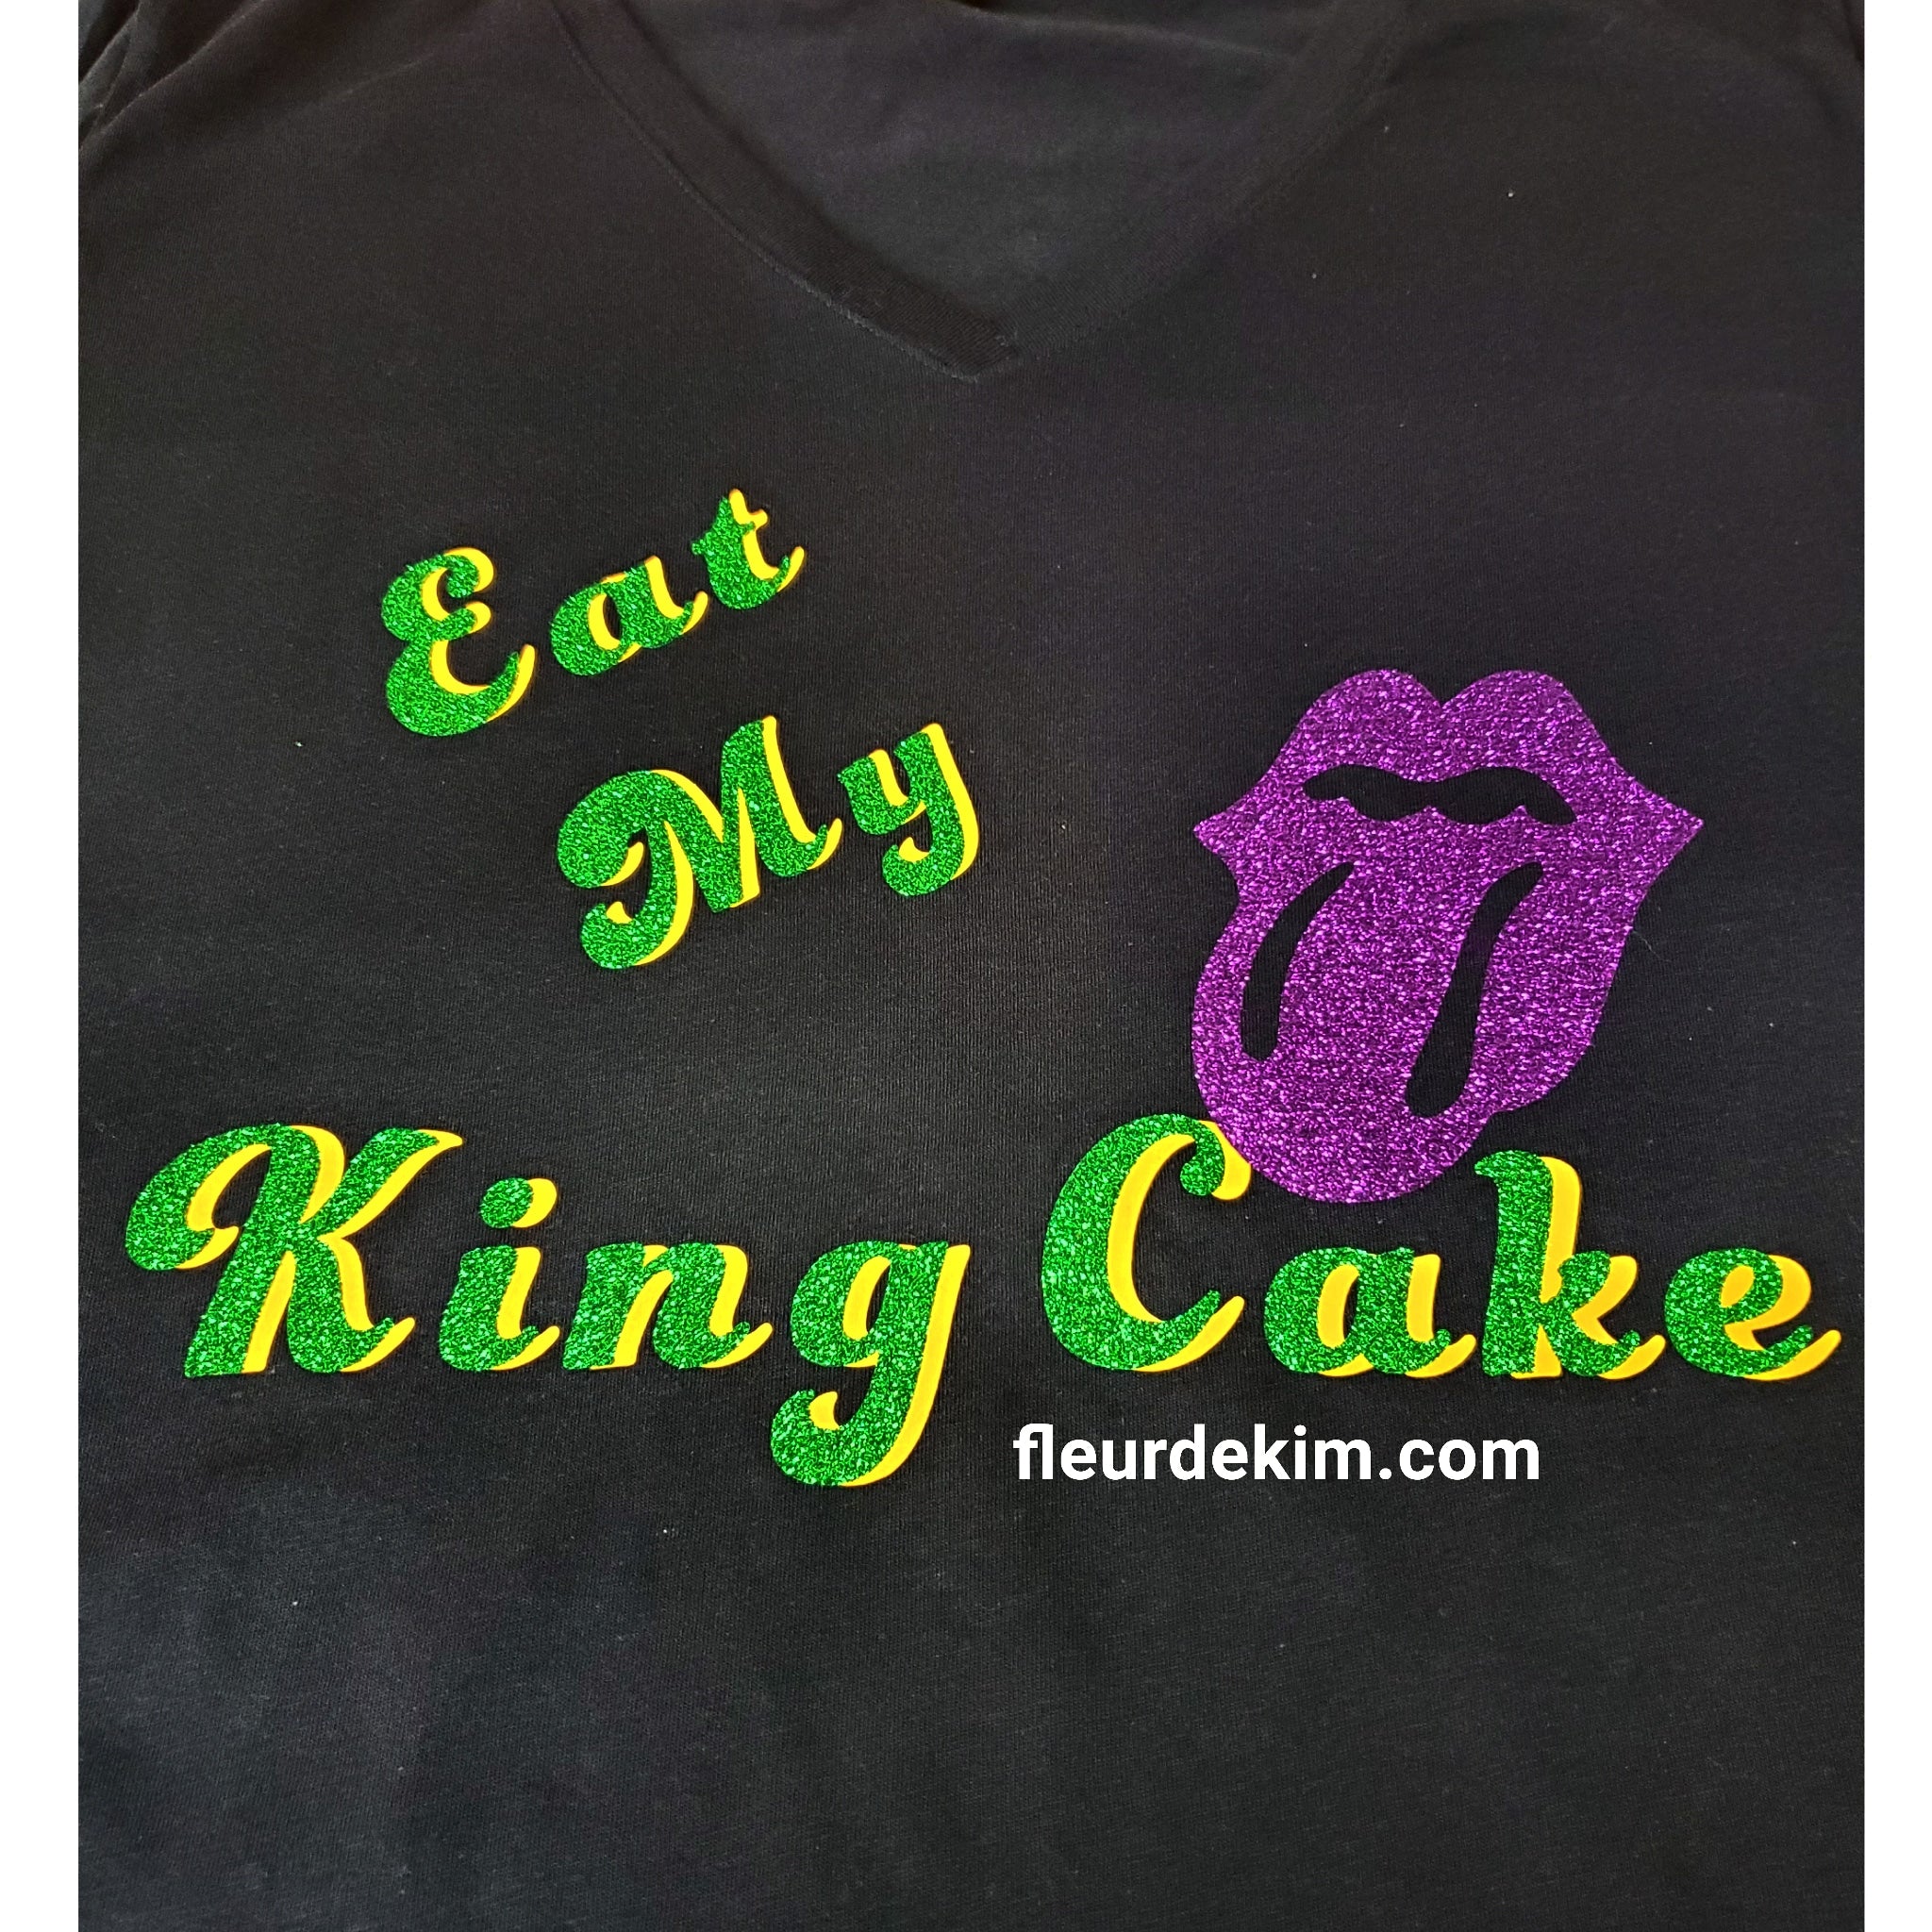 Eat my King Cake tshirt black